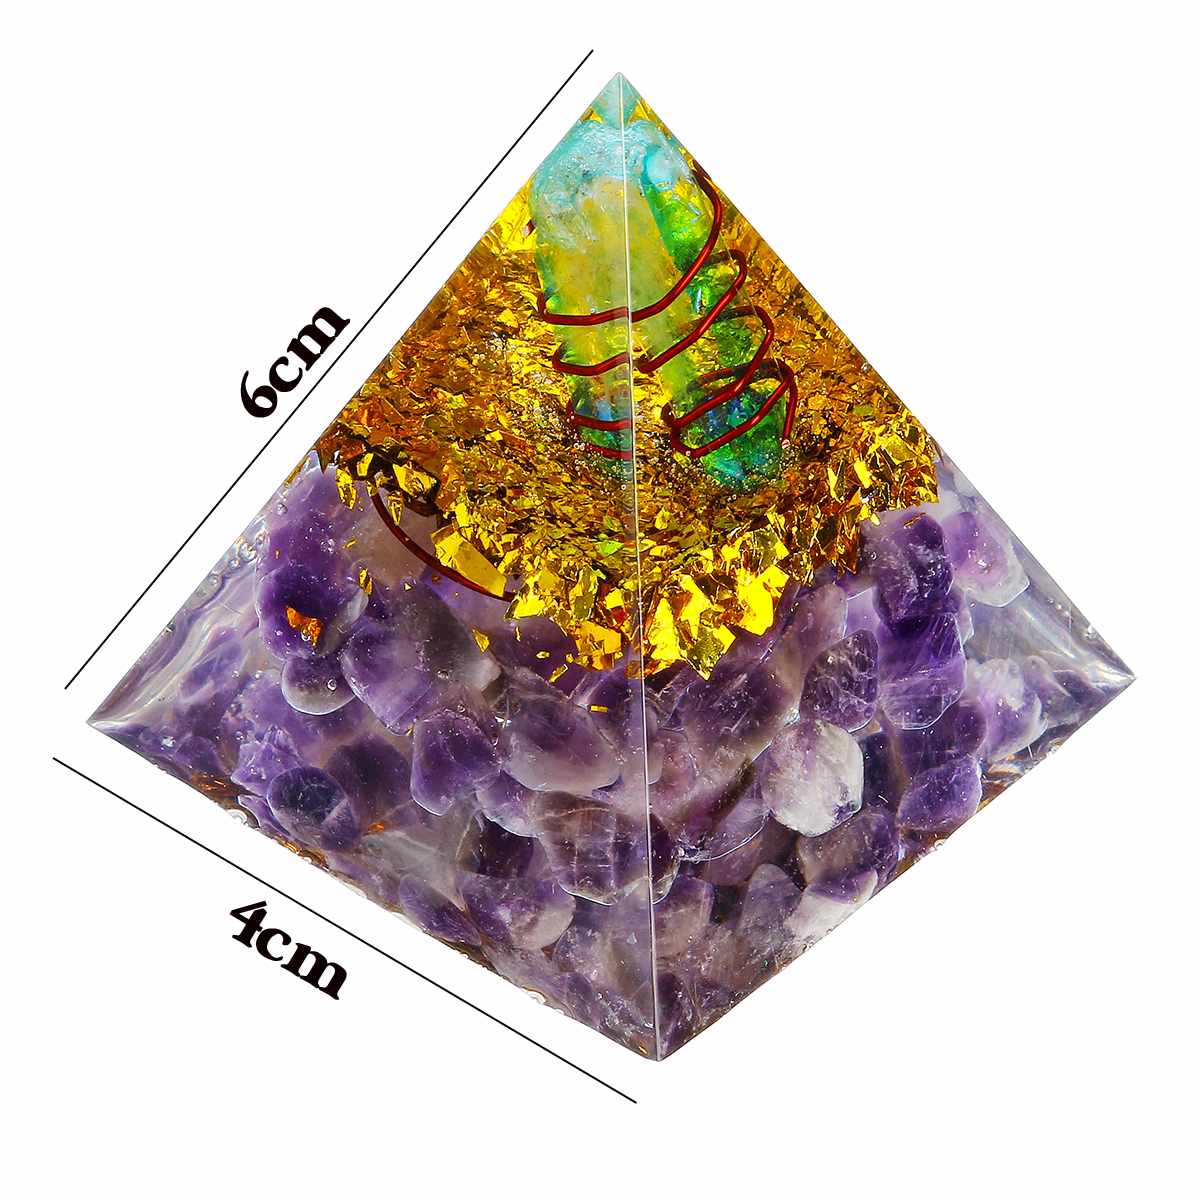 Crystal Amethyst Energy Circle Healing Crystal Reiki Pyramid Chakras Natural Stone Orgone Orgonite Pyramids Fengshui Home Decor